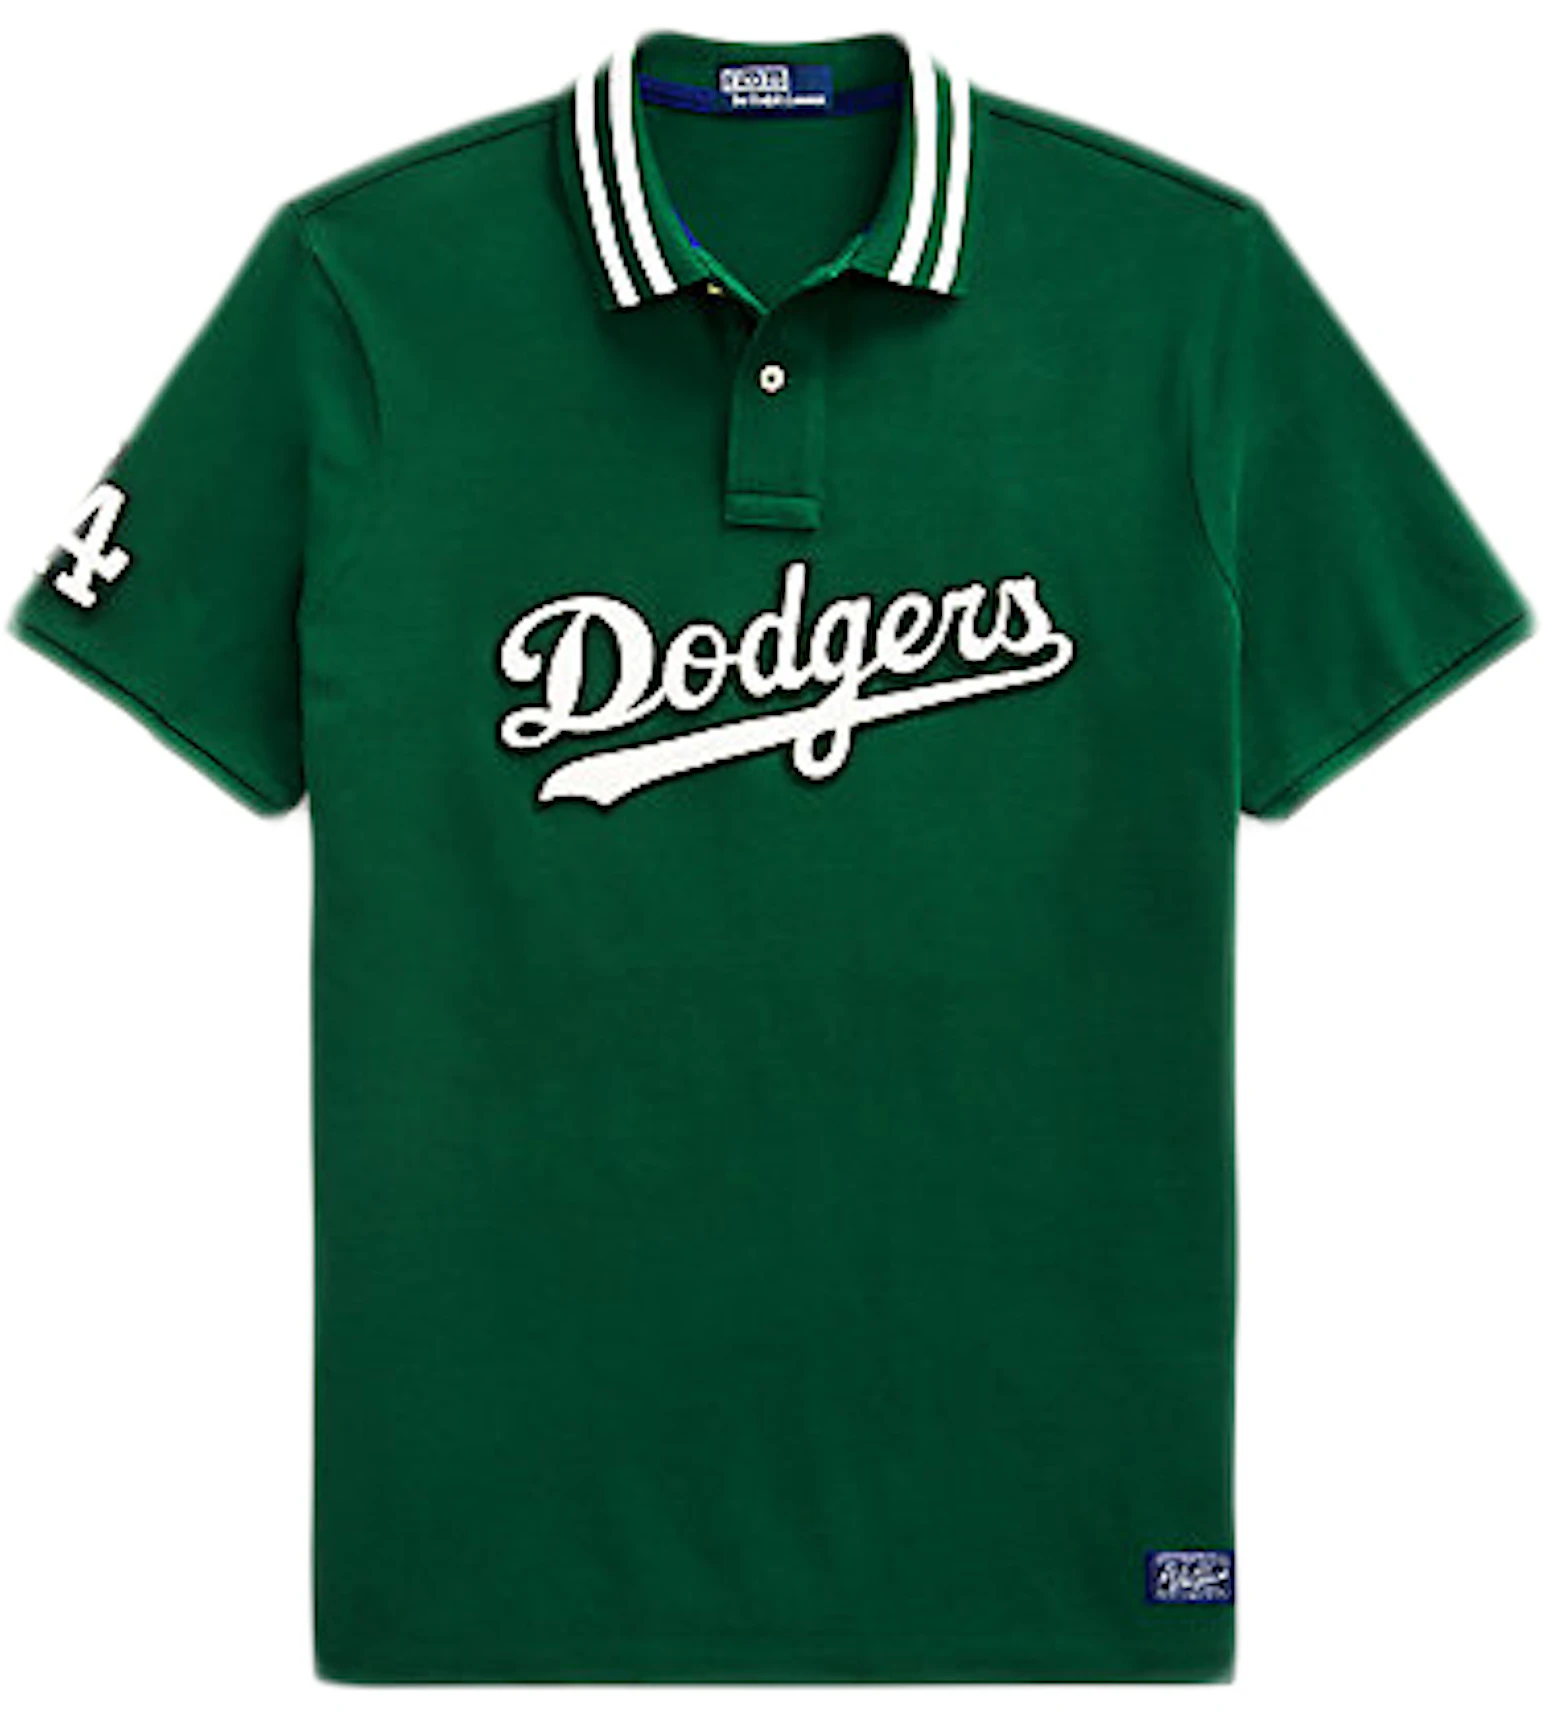 Polo Ralph Lauren Dodgers Polo Shirt (Mens) New Forest - SS21 - US